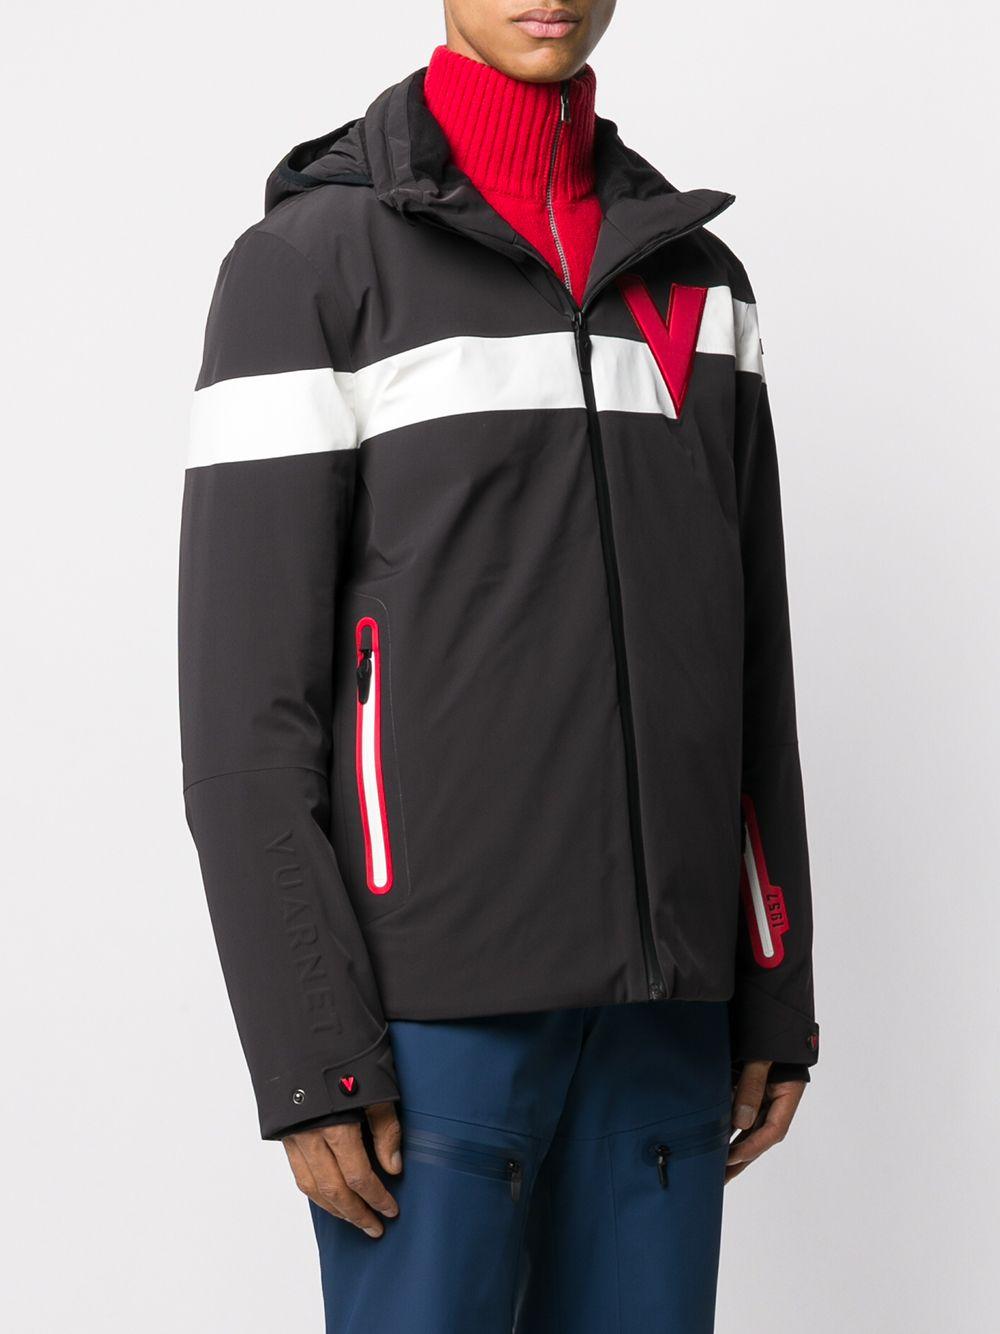 Vuarnet Synthetic Alberich Ski Jacket in Black for Men - Lyst